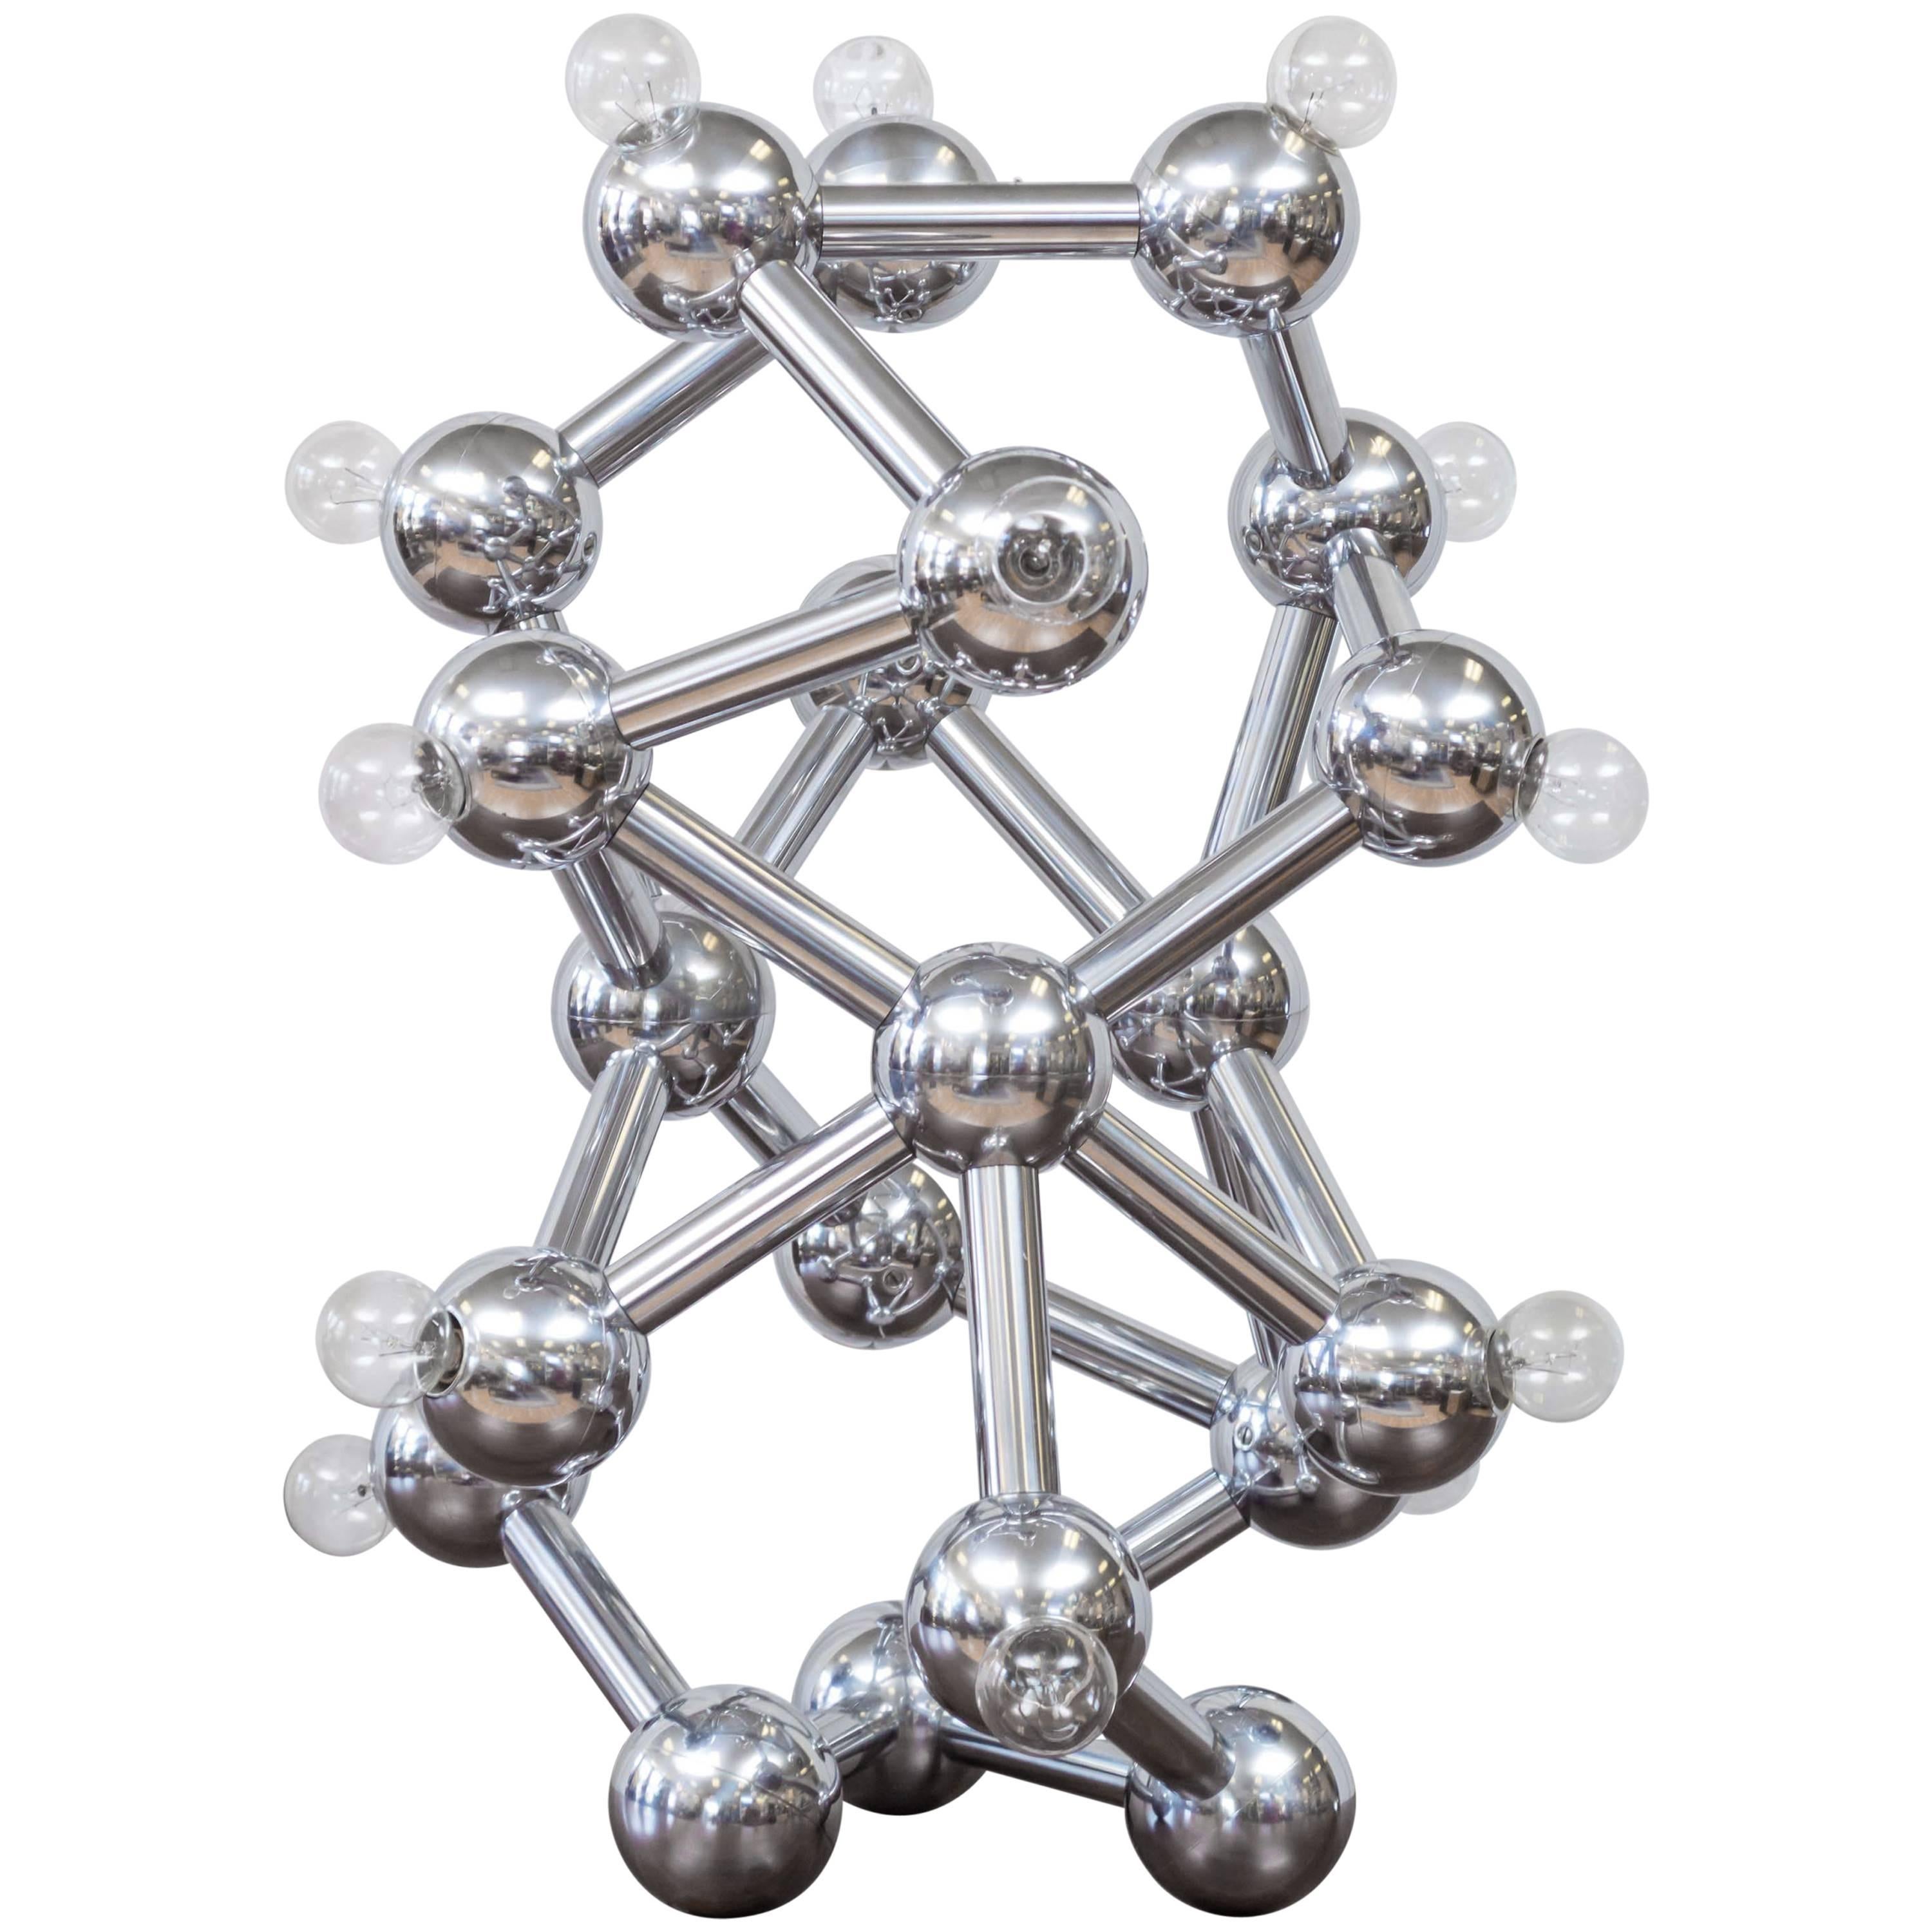 Spectacular Chrome Eighteen-Light Molecule Lamp by Torino